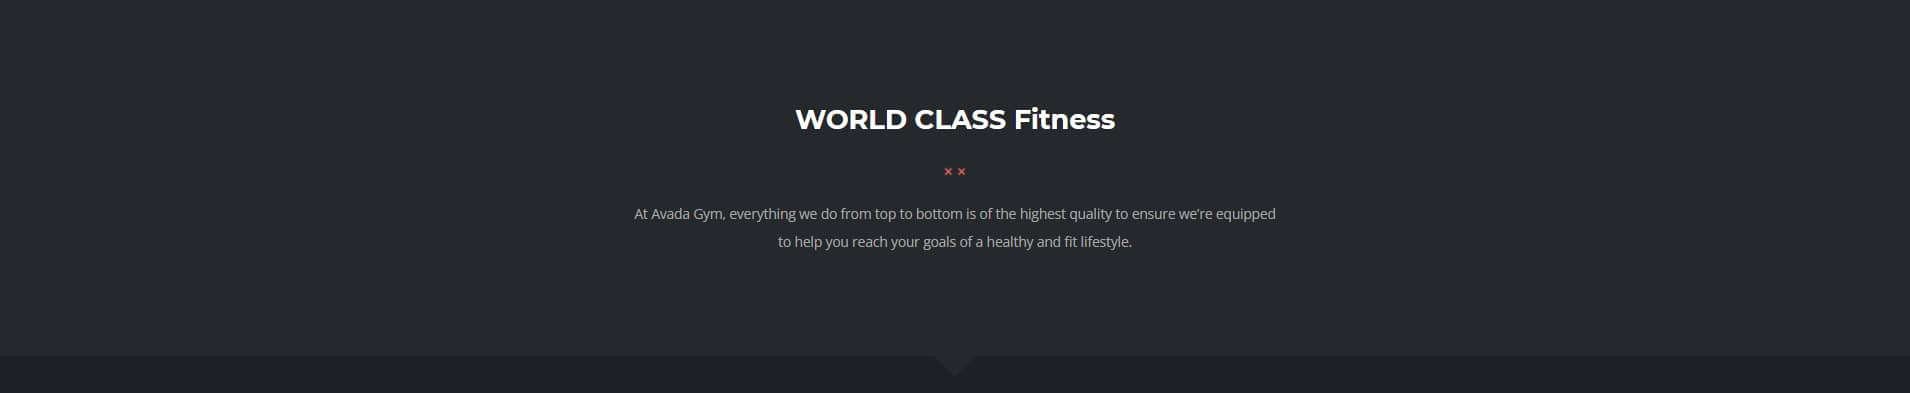 Avada Gym World Class Fitness